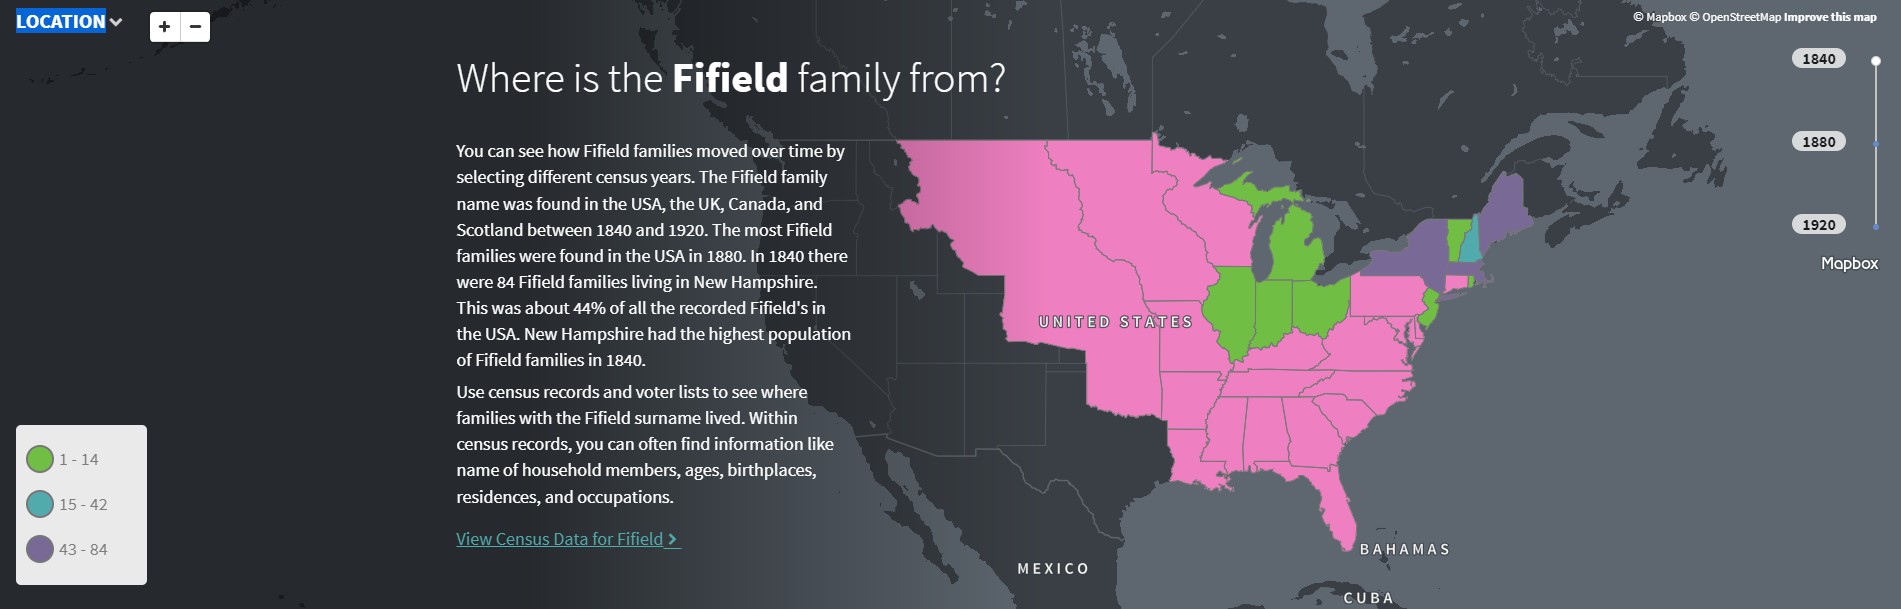 Ancestry Fifield USA distribution